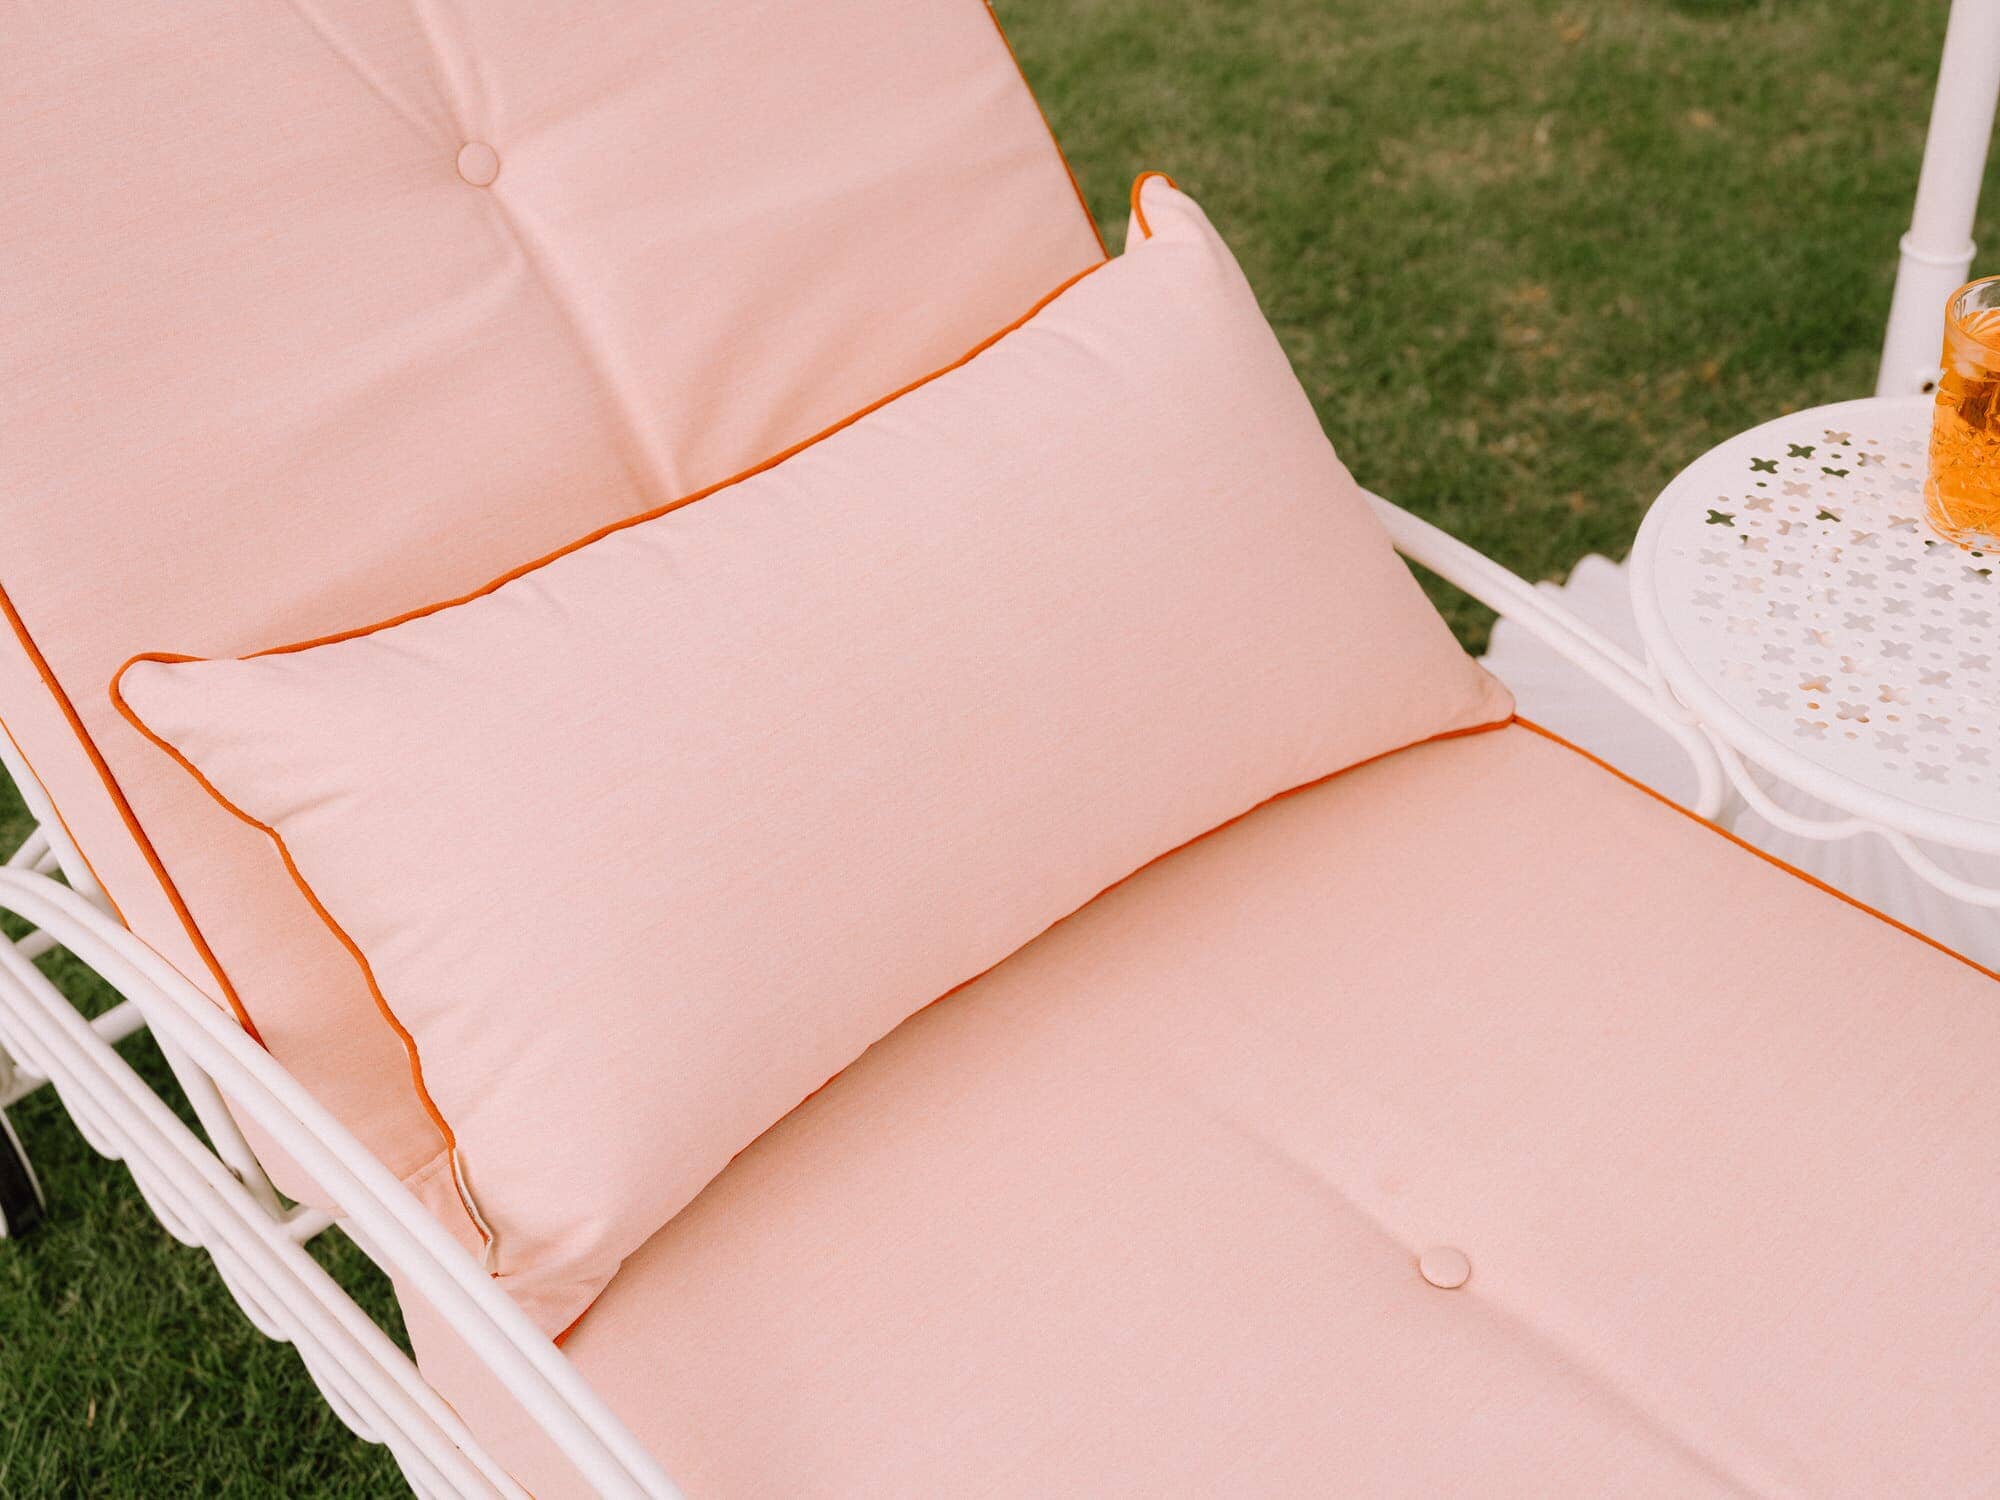 Riviera pink throw pillow on reclining sun lounger in a garden setting